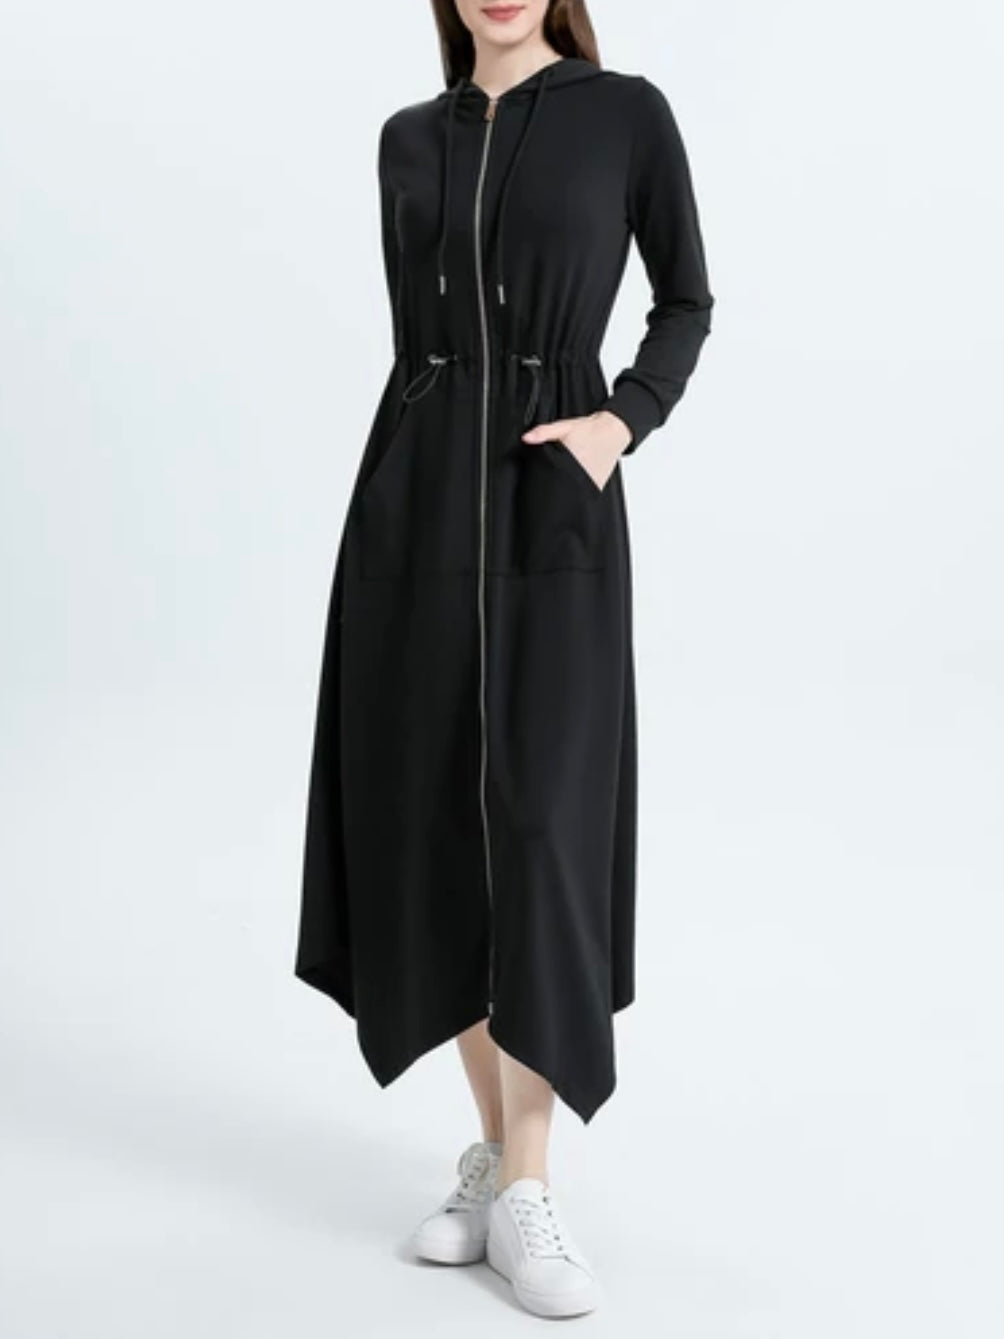 Black hooded zipper down front closure dress